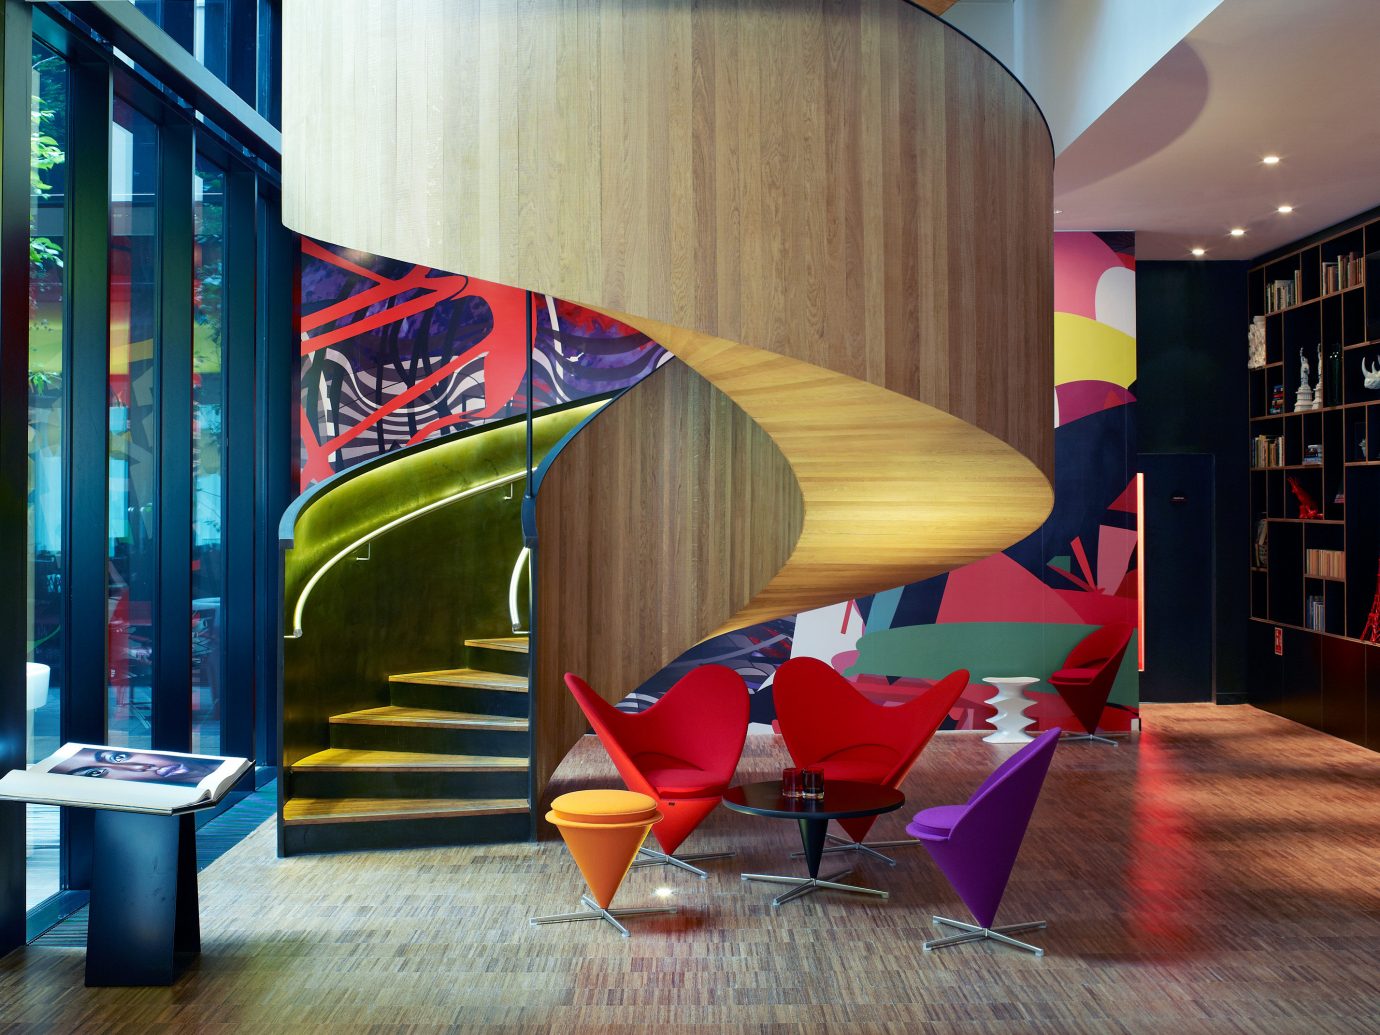 Budget Hotels London Trip Ideas floor indoor color room interior design art Lobby Design furniture